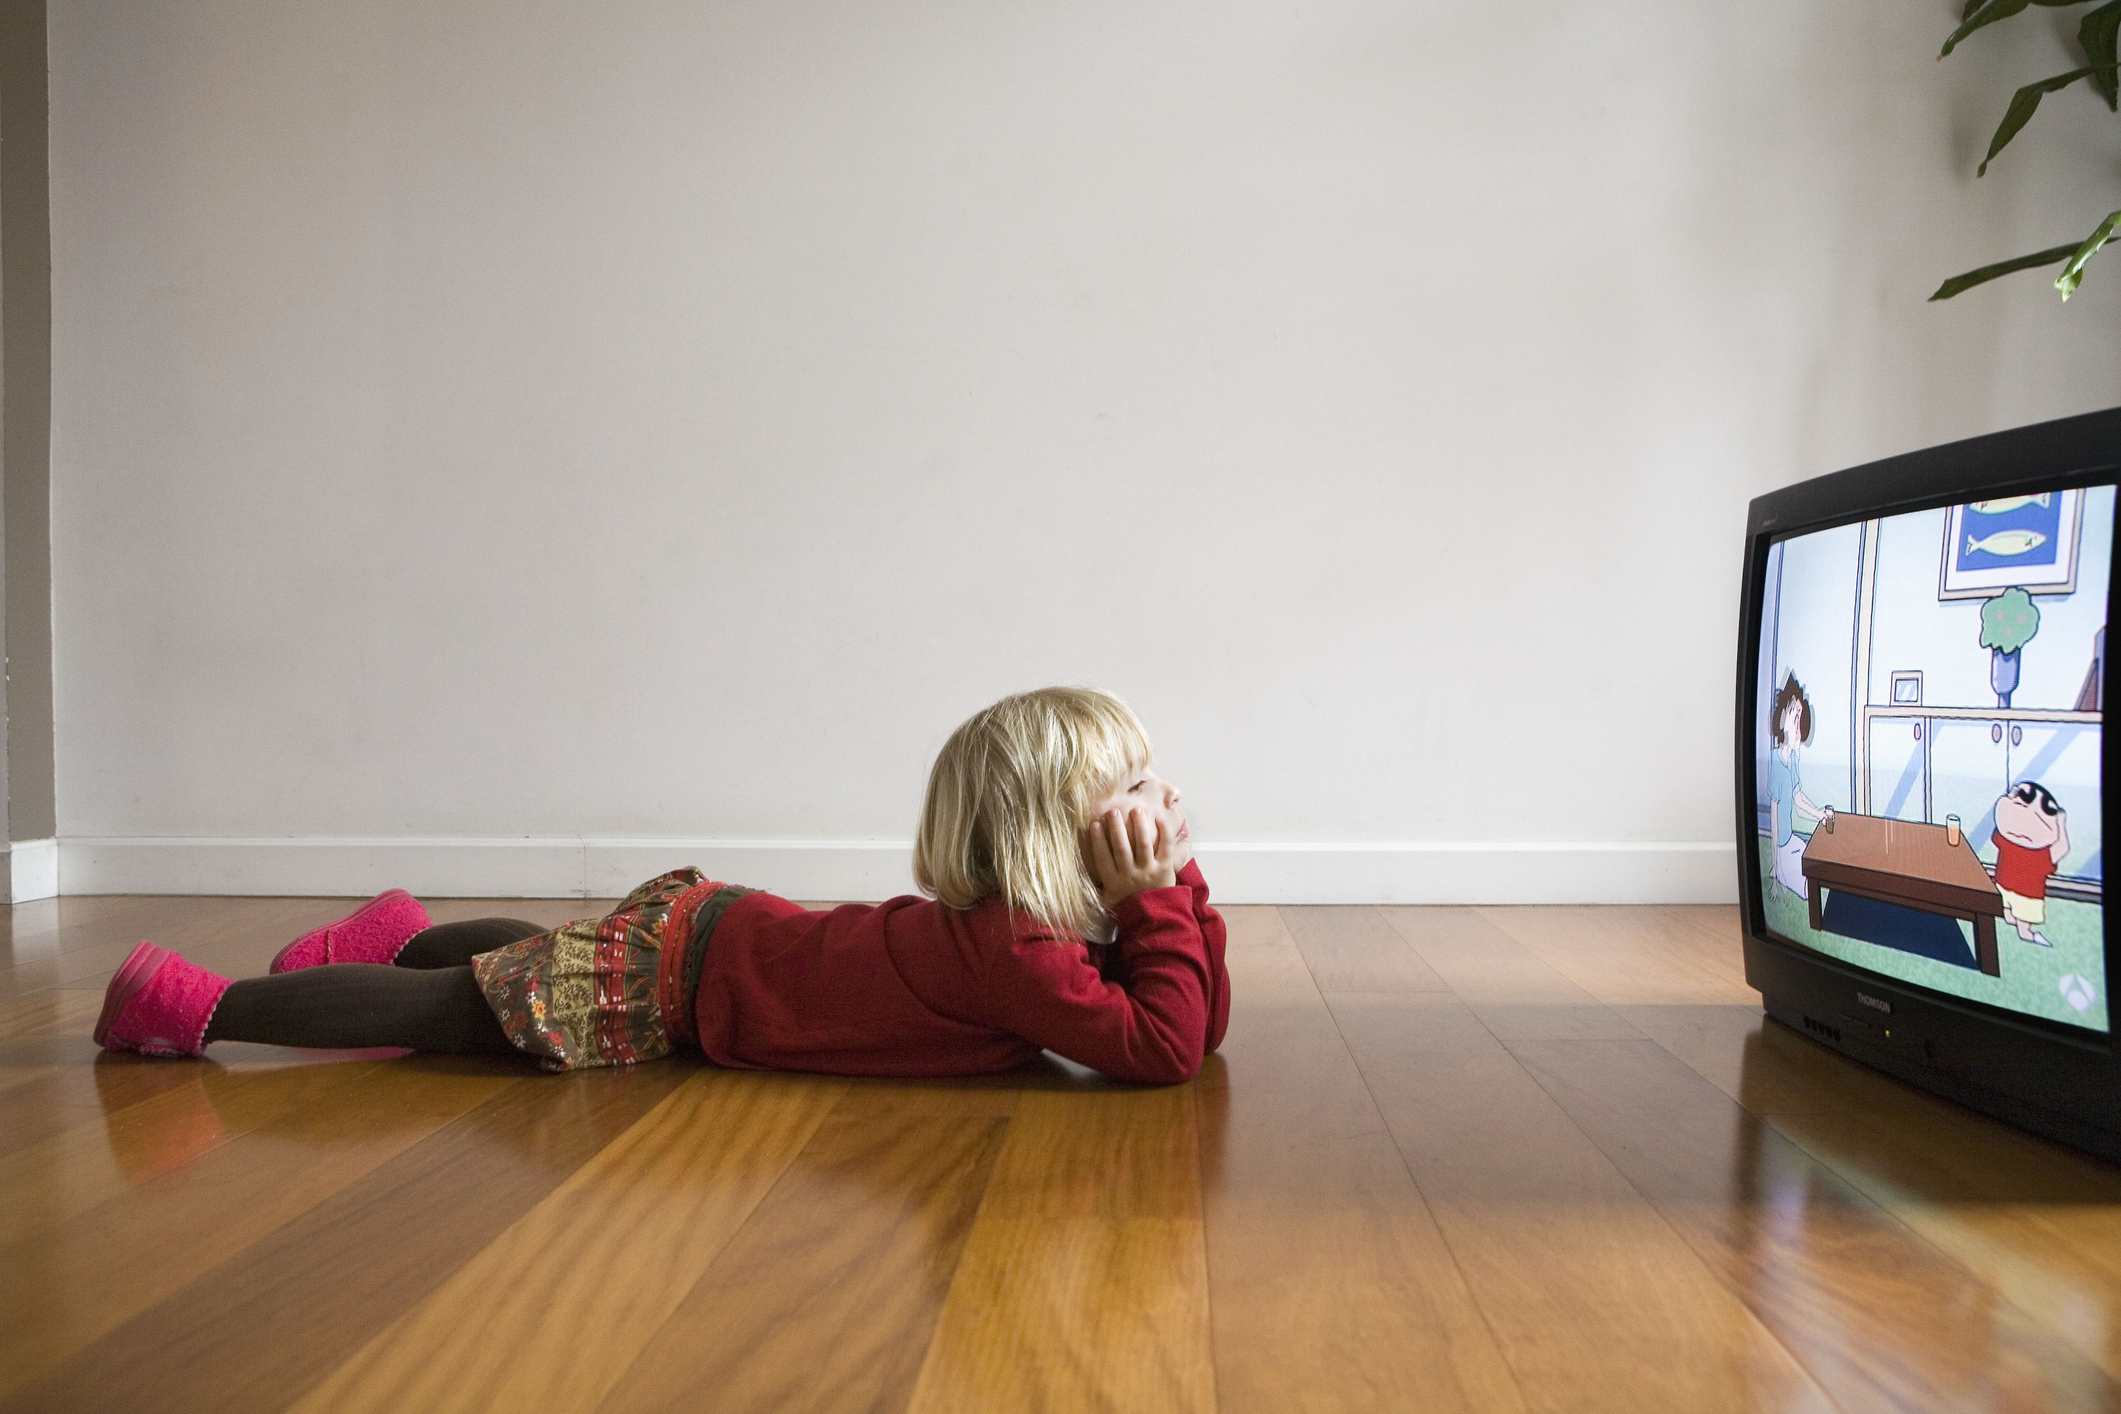 Пока родители смотрят телевизор. Телевизор для детей. Детство перед телевизором. Девочка телевизор. Малыш и телевизор.